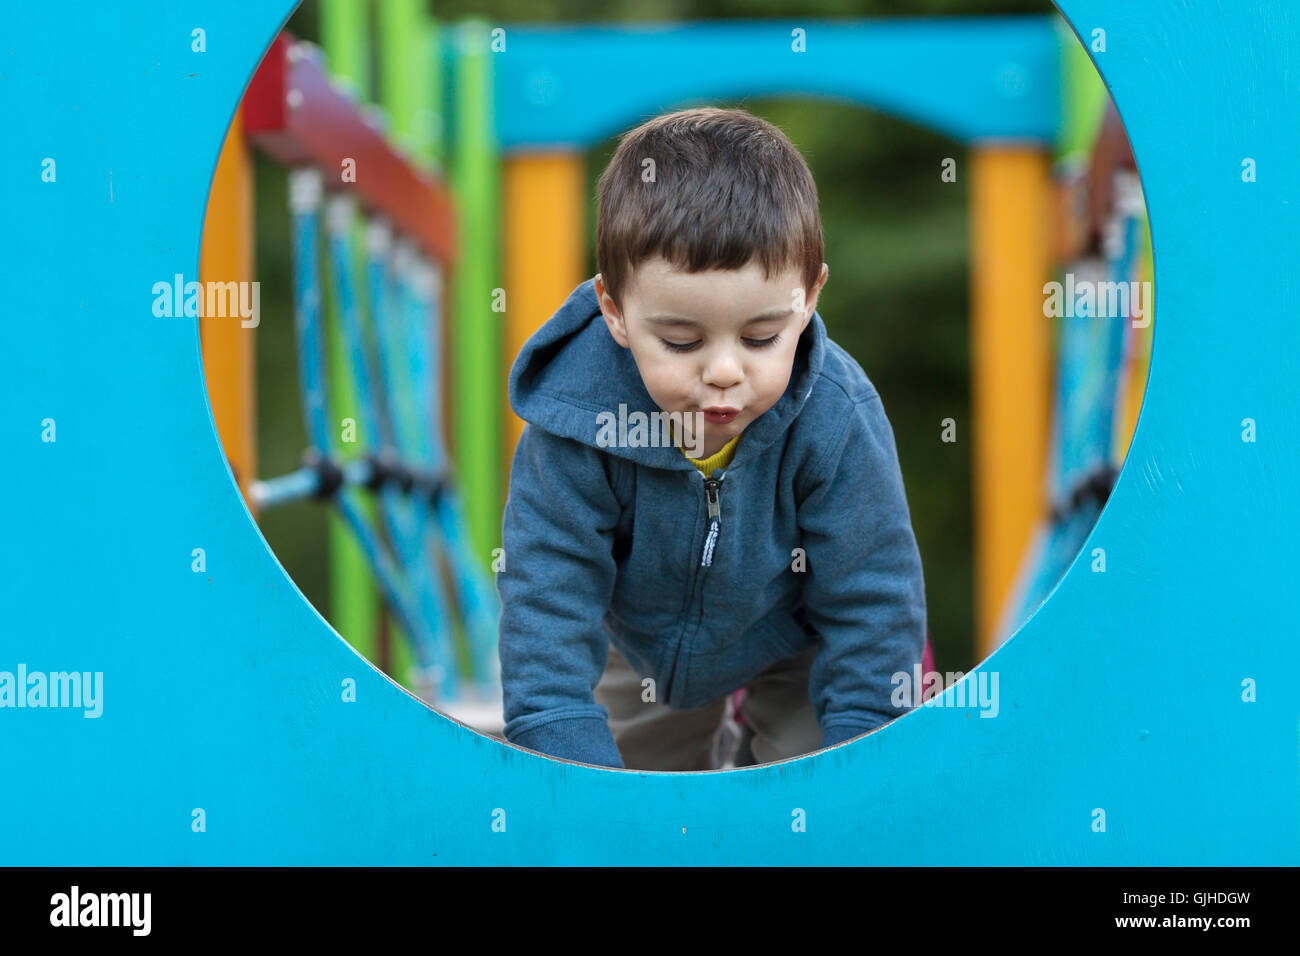 Boy on climbing play equipment in playground Stock Photo